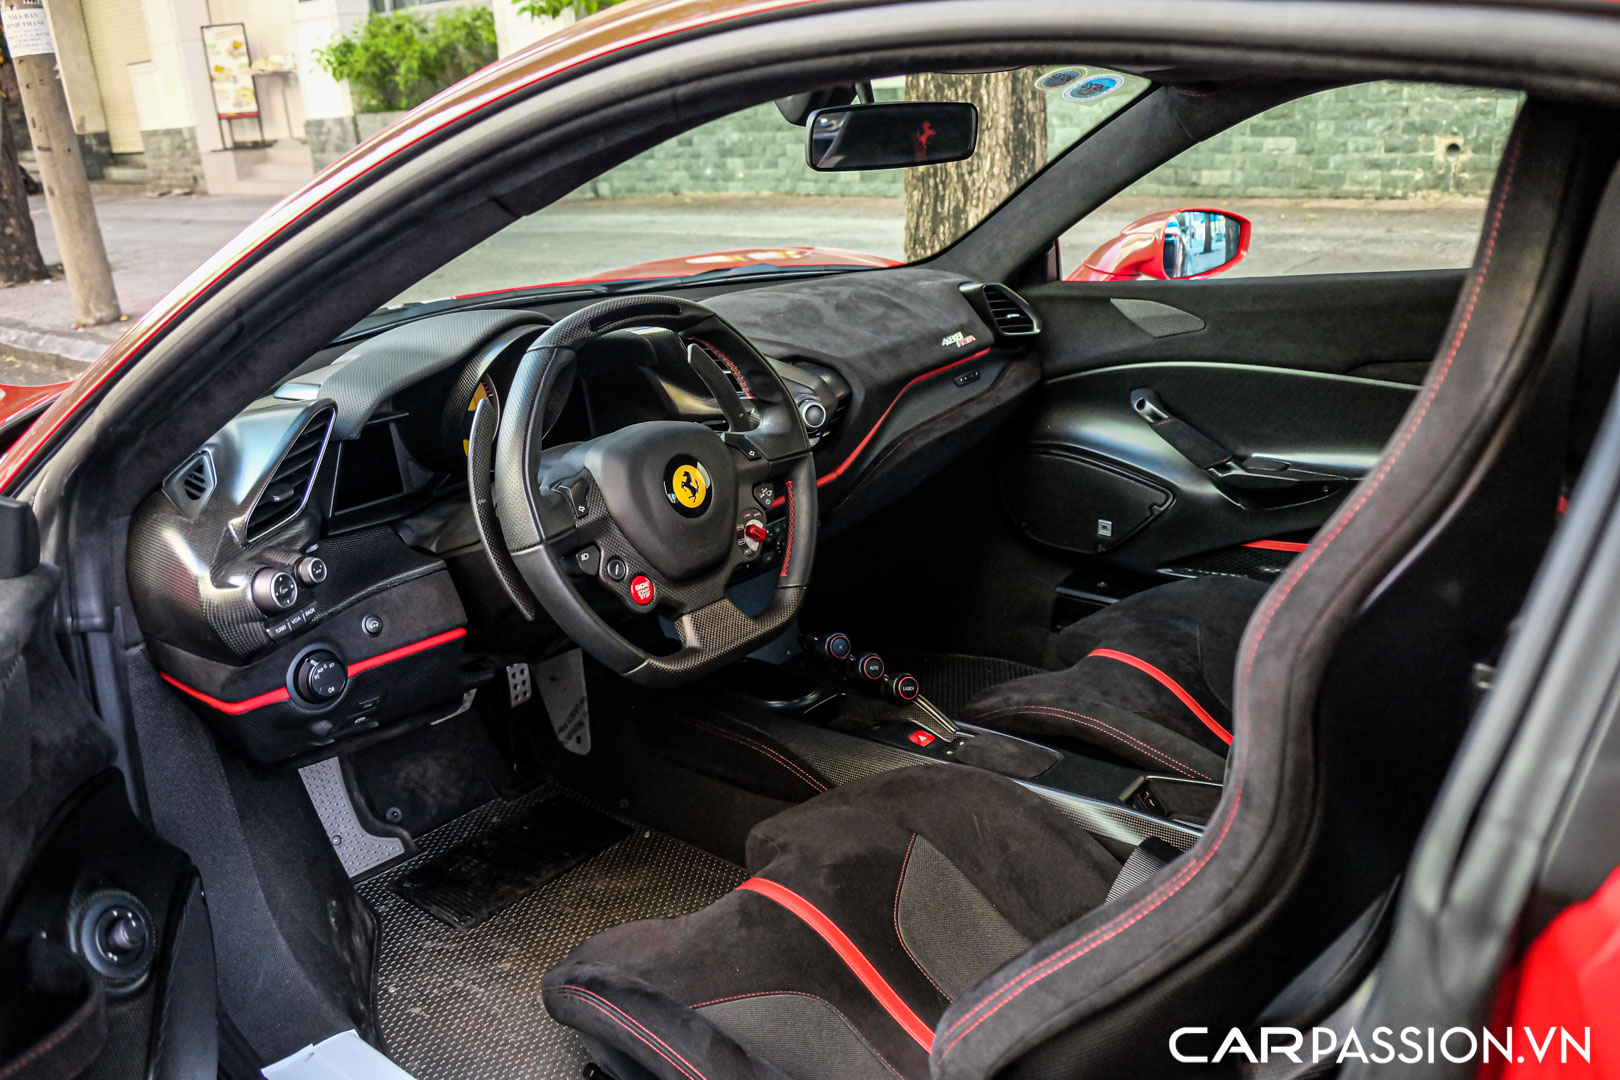 CP-Ferrari 488 Pista độc nhất Việt Nam10.jpg